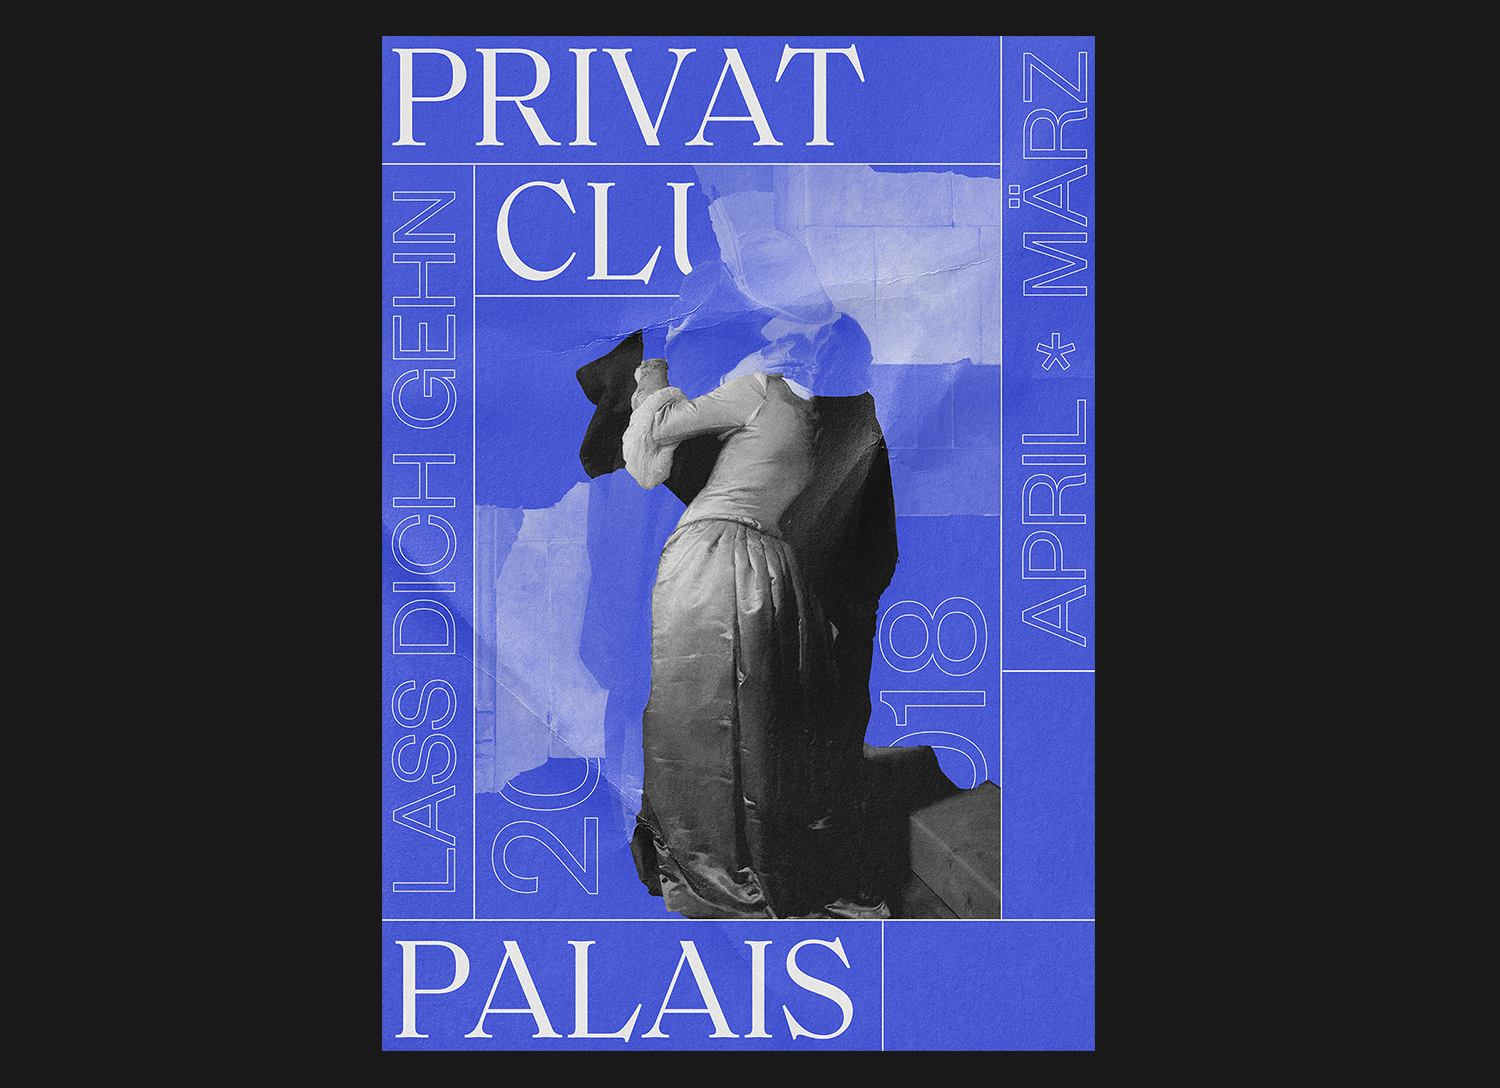 Palais Privat Club Poster 2